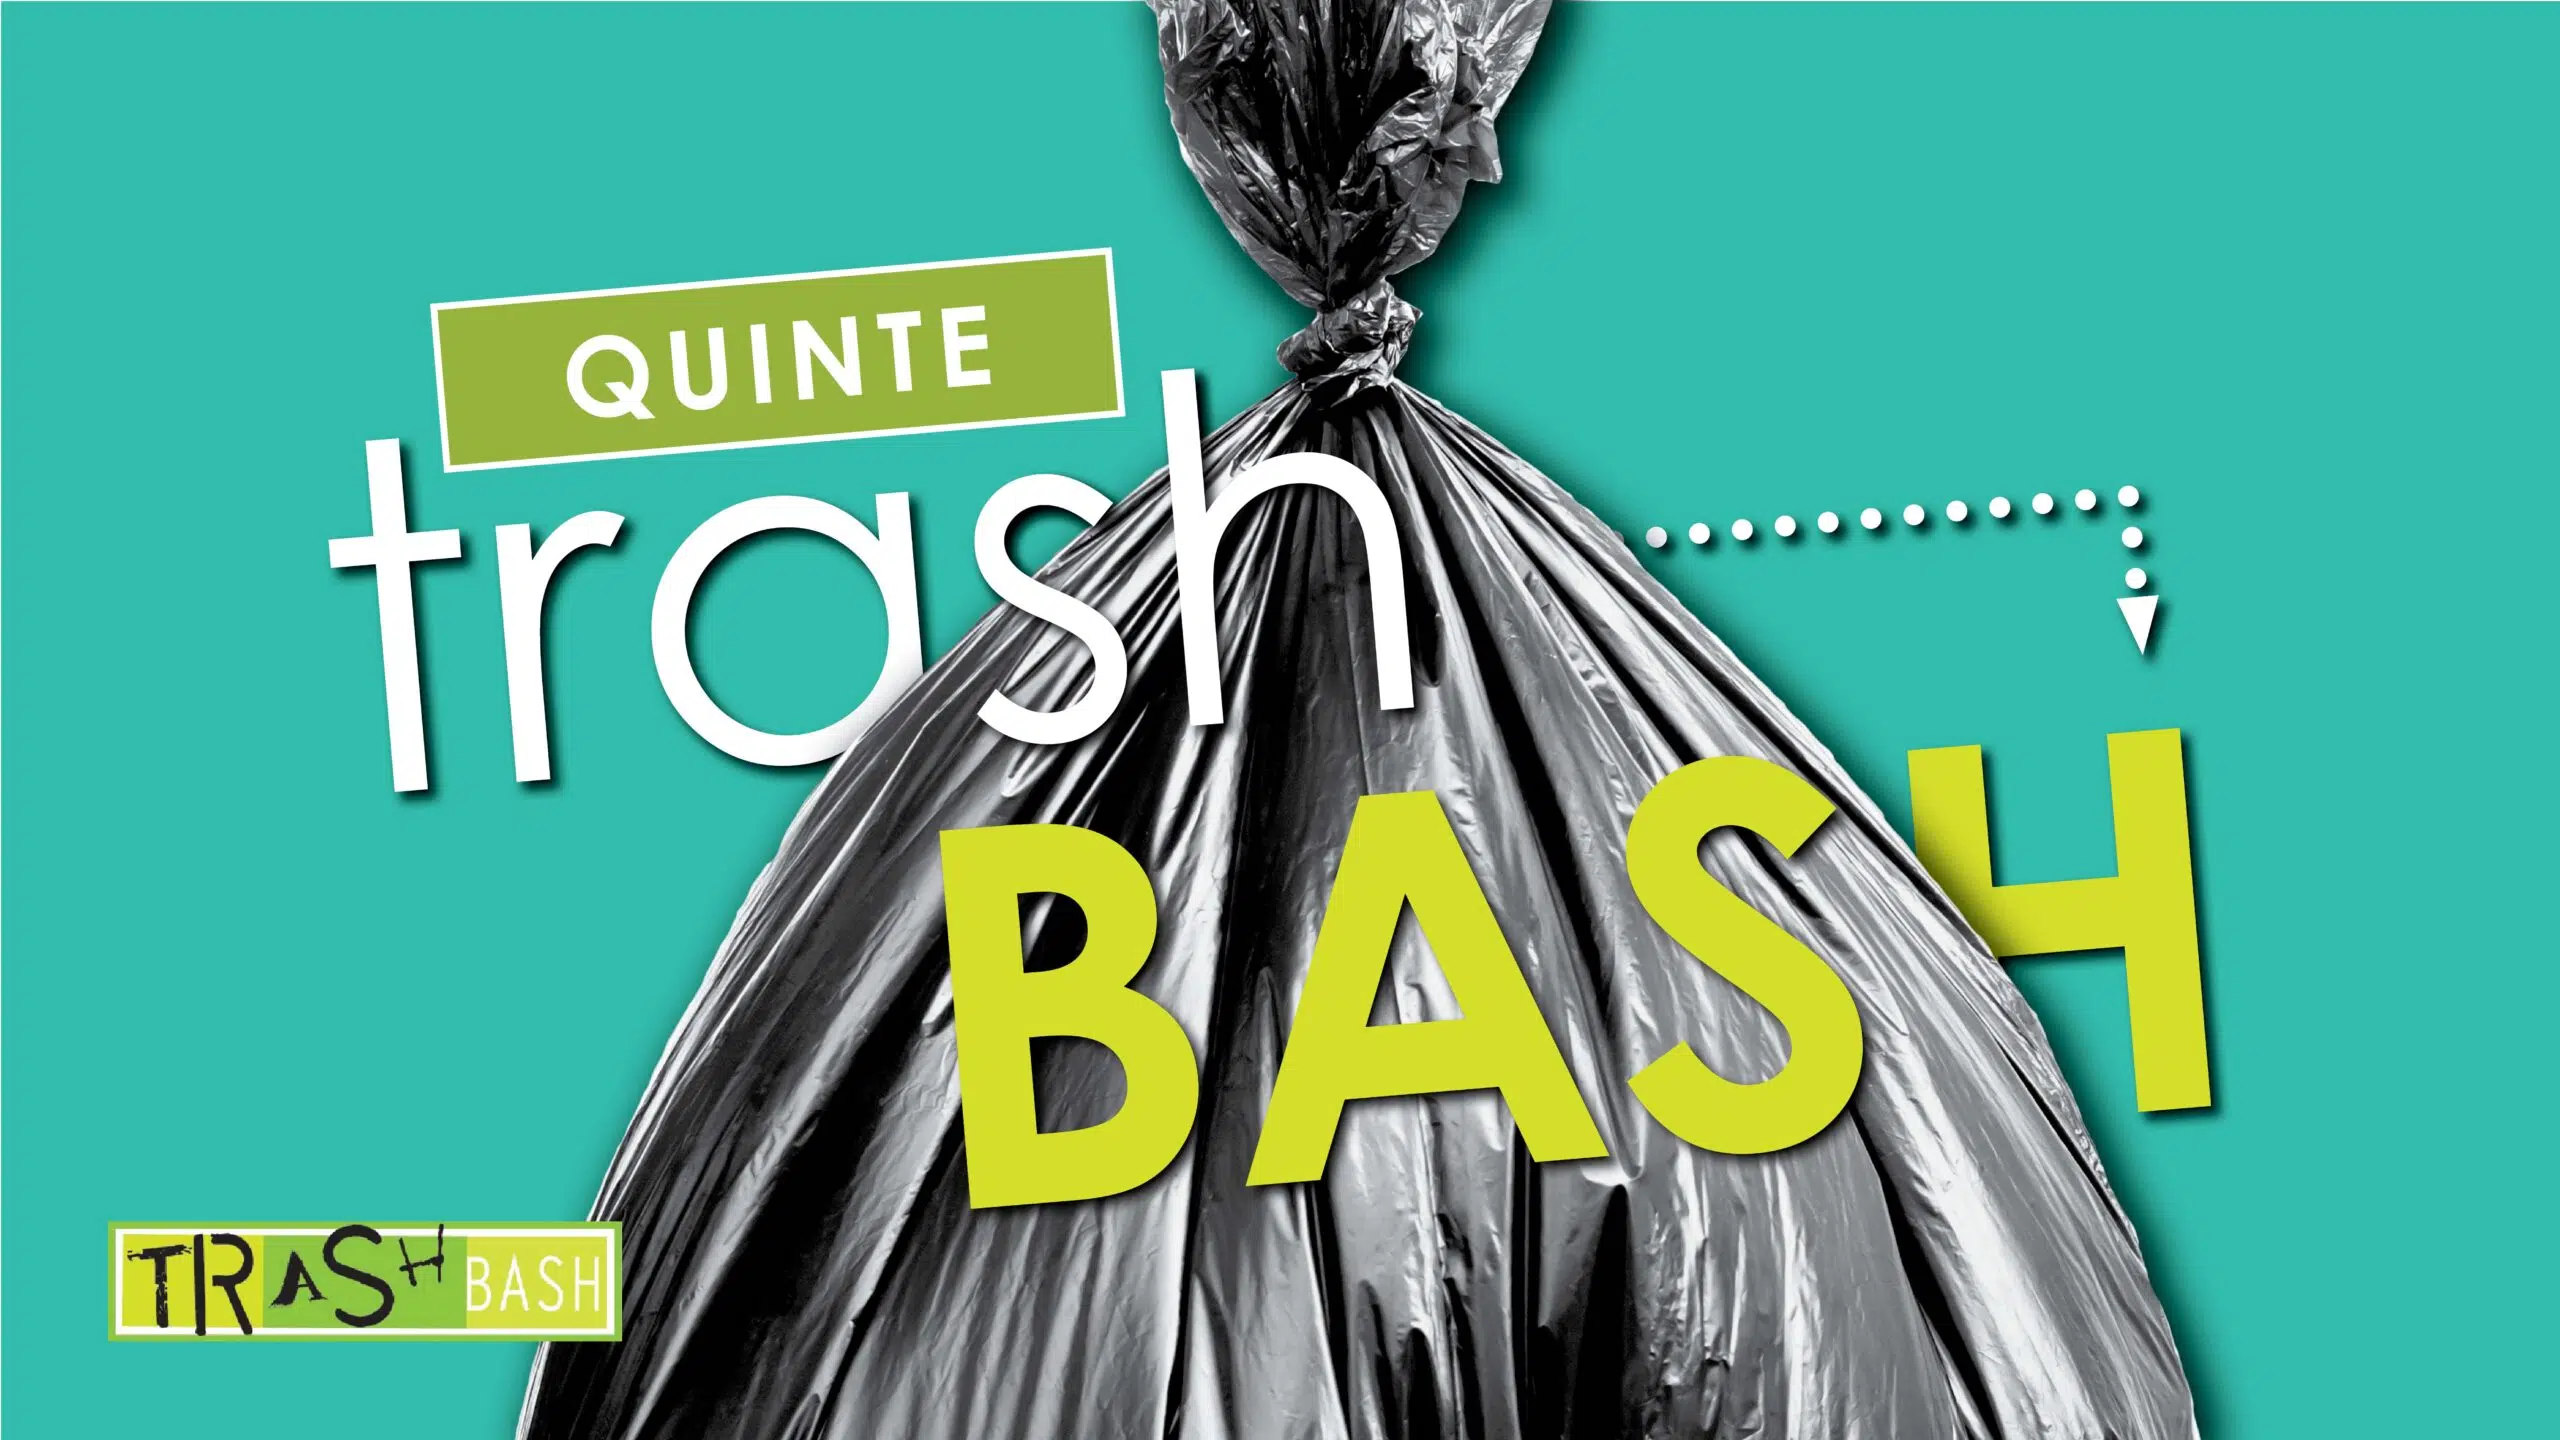 Earth Day edition of Quinte Trash Bash